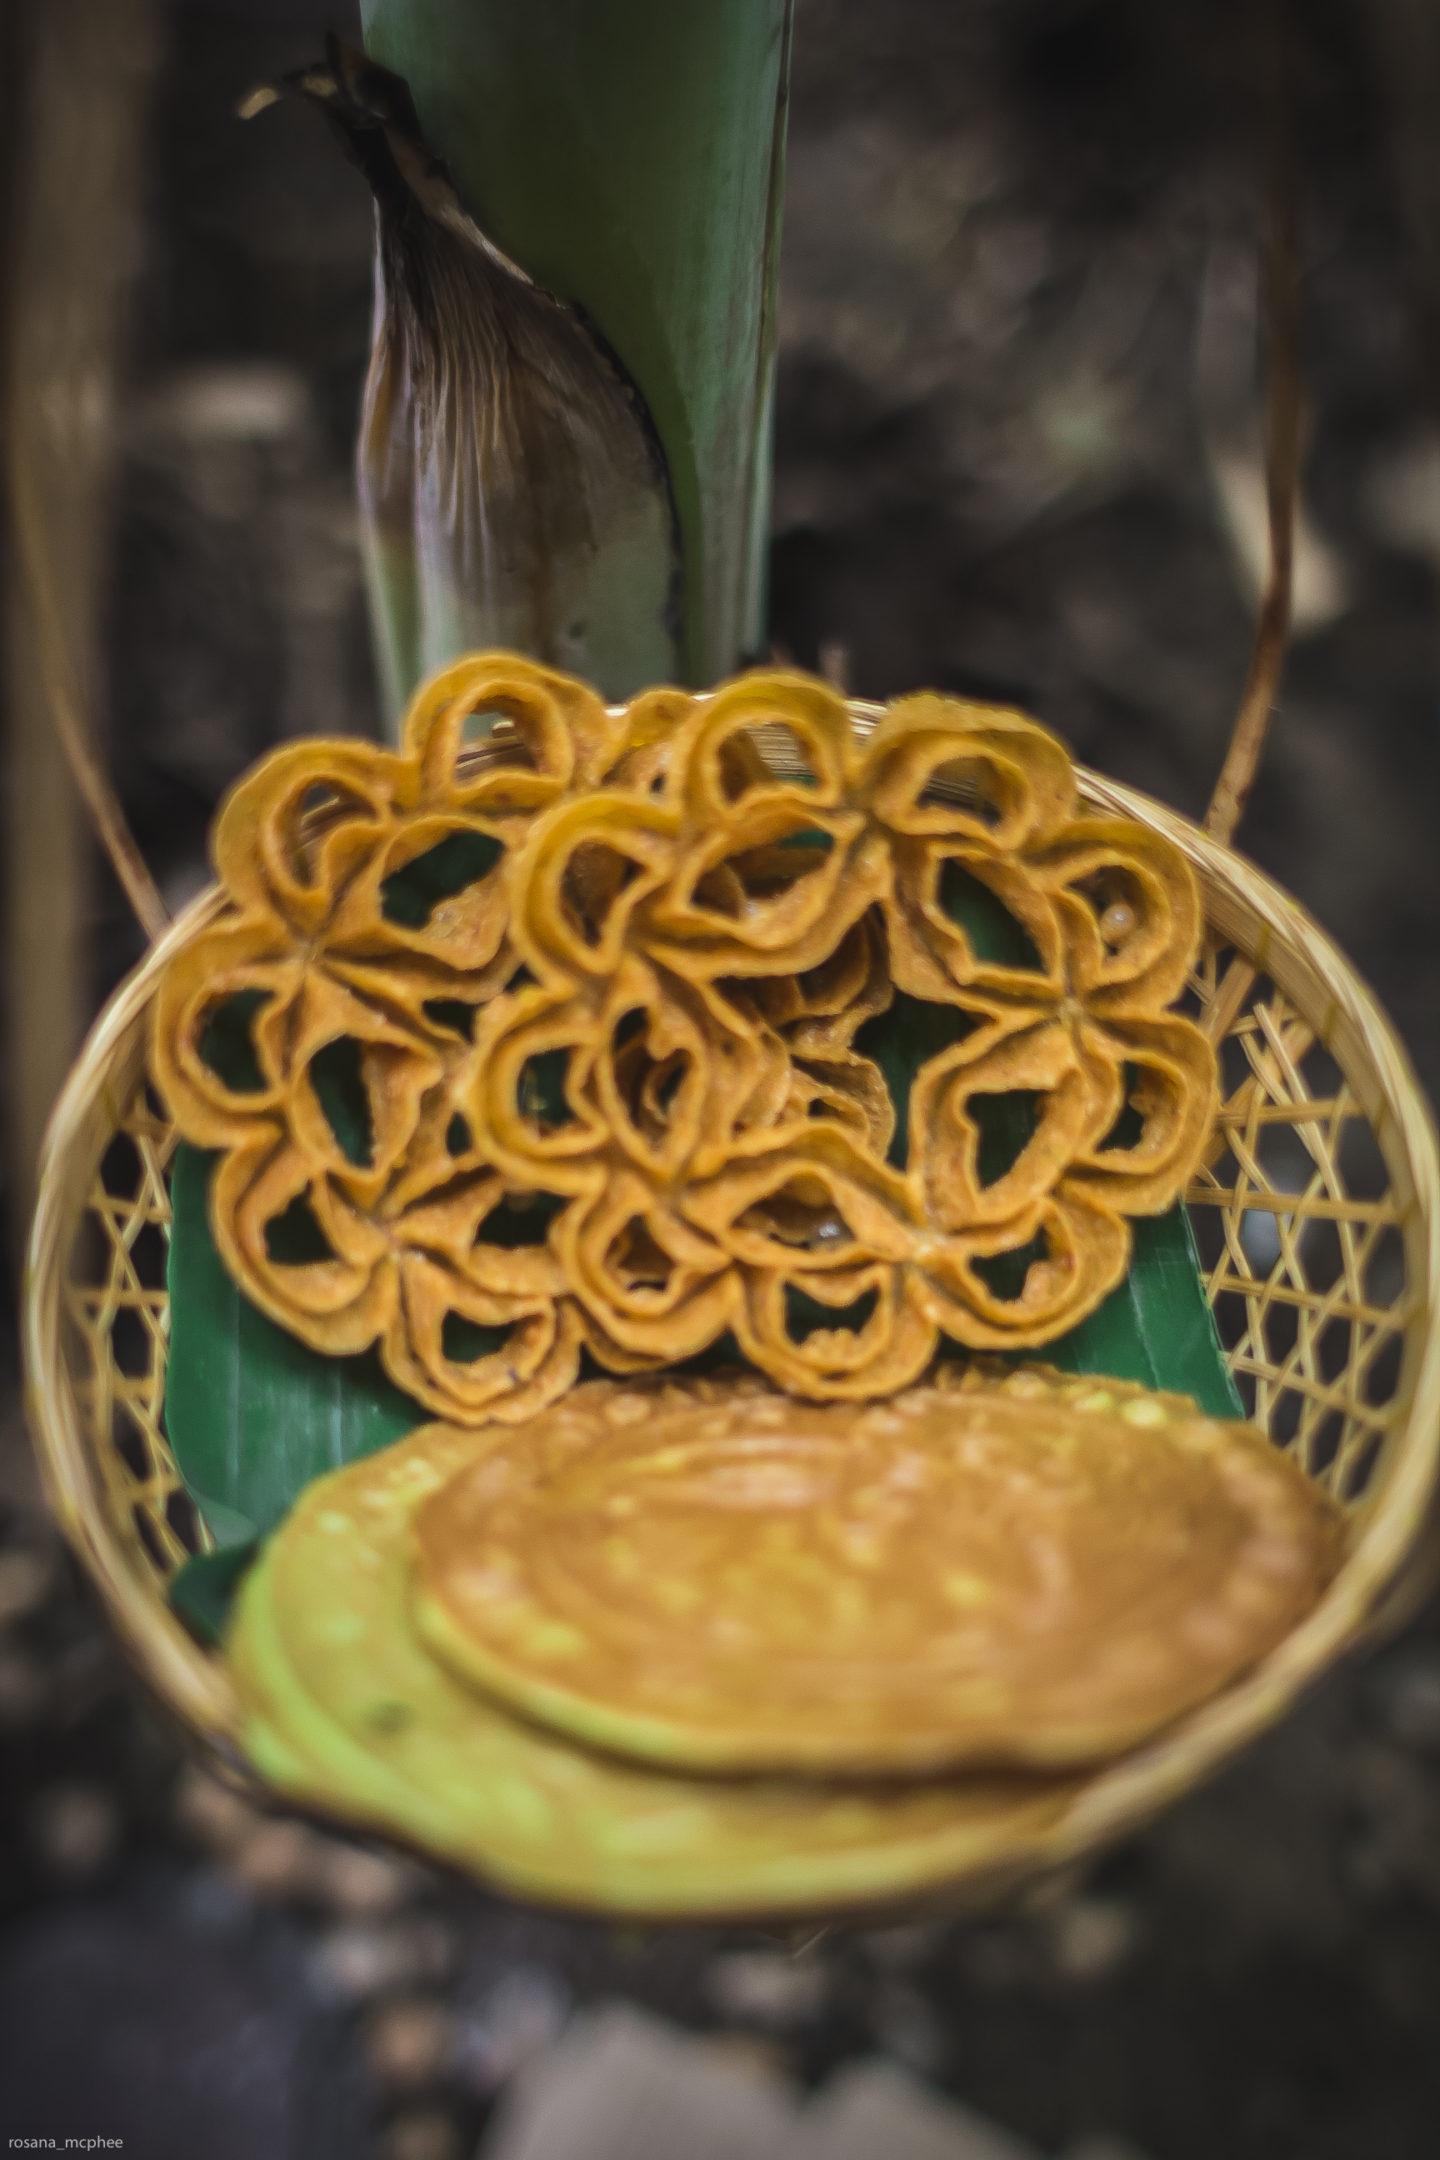 'Thai cookie' - Thai Waffles - kanom rung peung, a gastronomic experience in Bangkok 